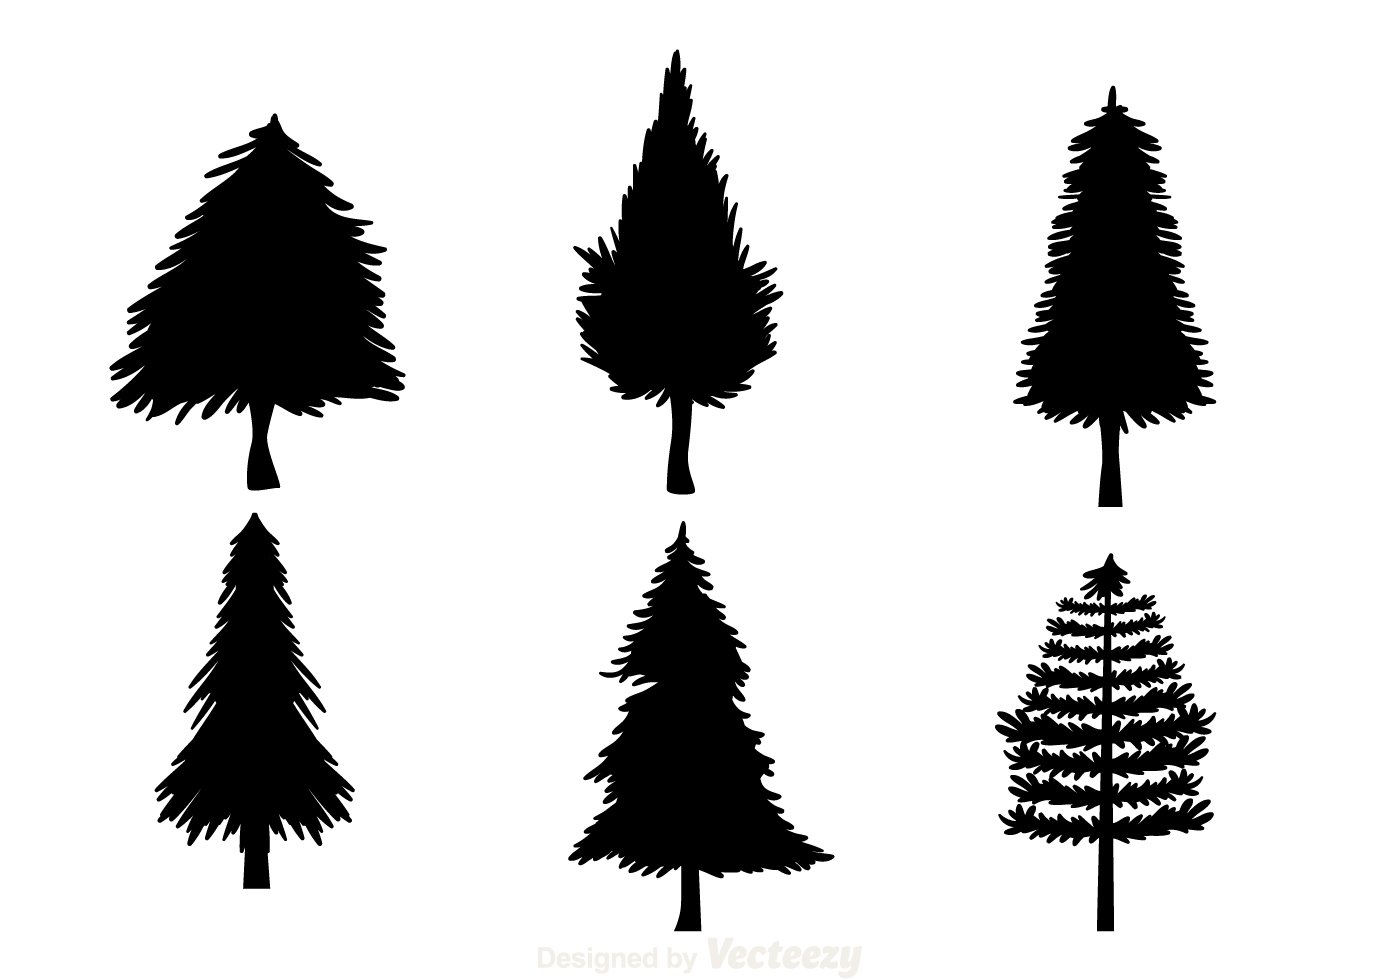 Tree Silhouette Free Vector Art - (10027 Free Downloads)